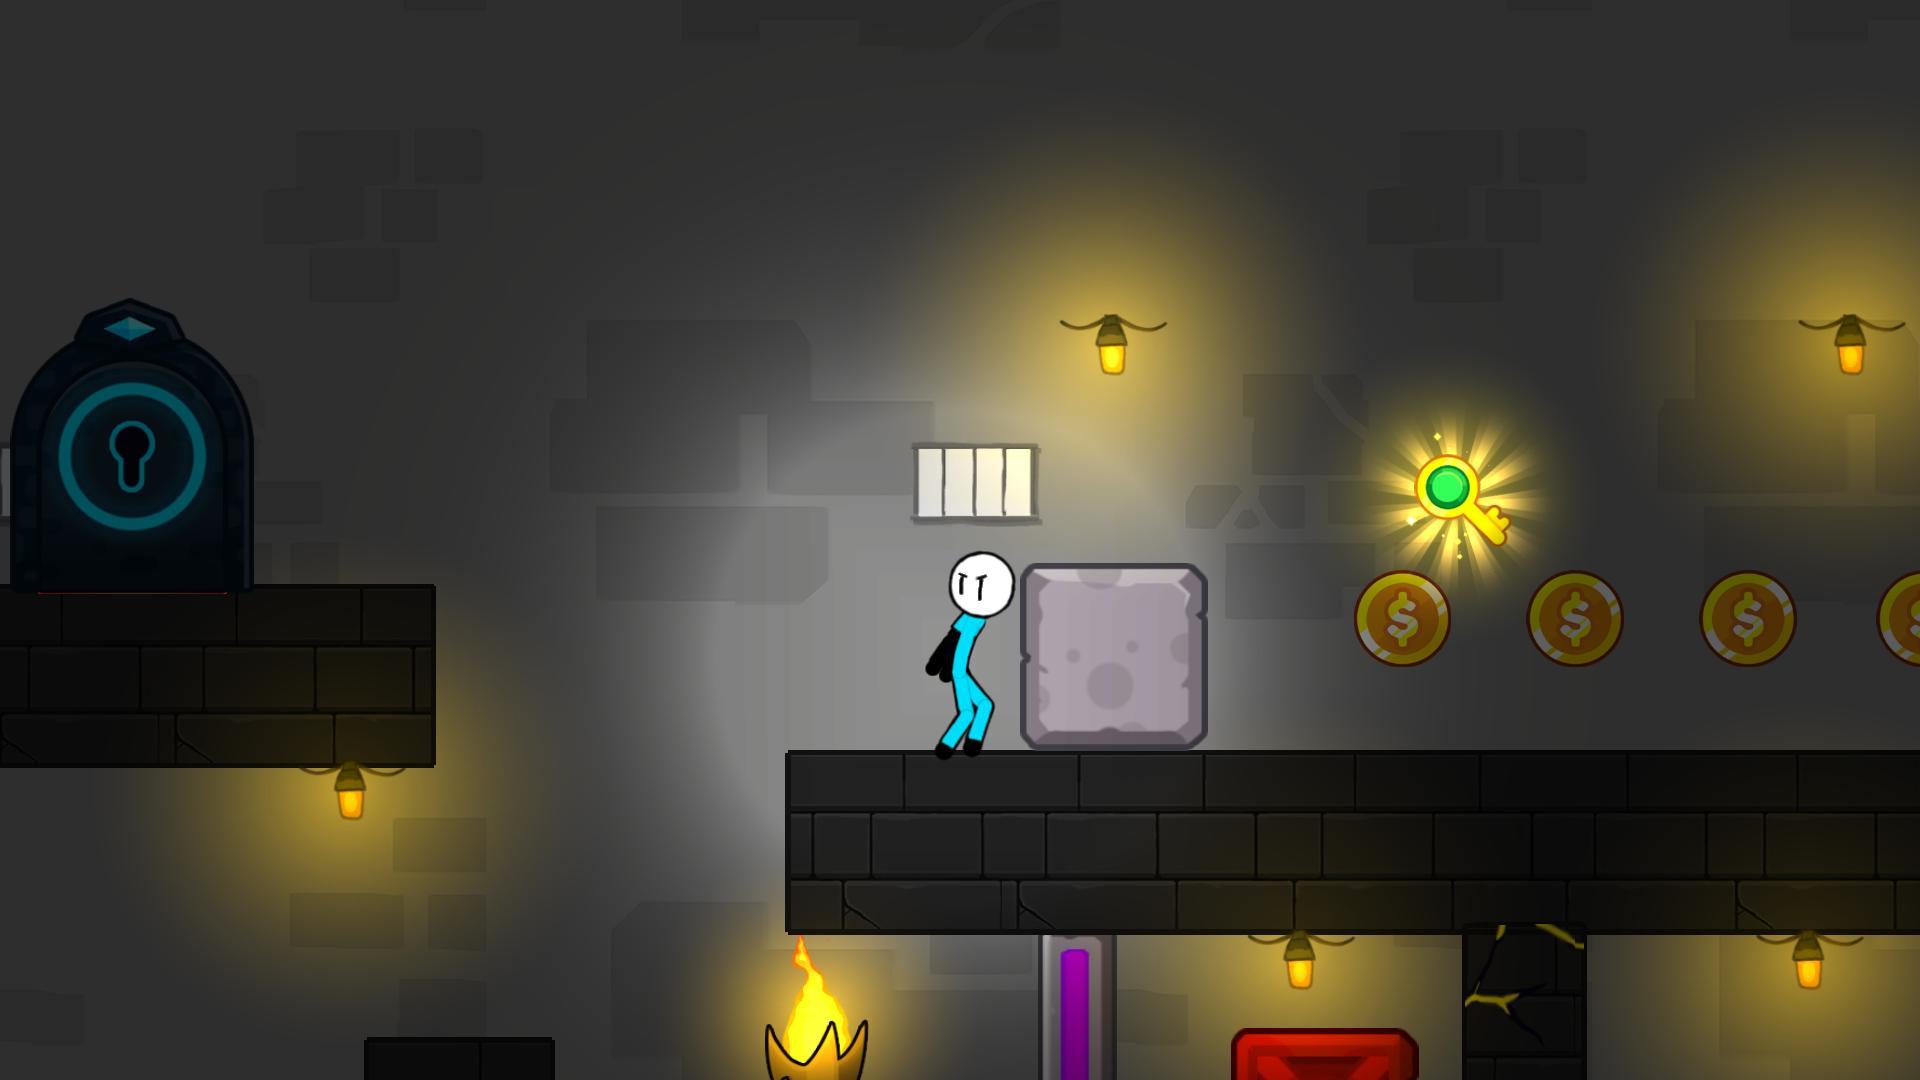 Obby Run: Prison Break Escape android iOS apk download for free-TapTap